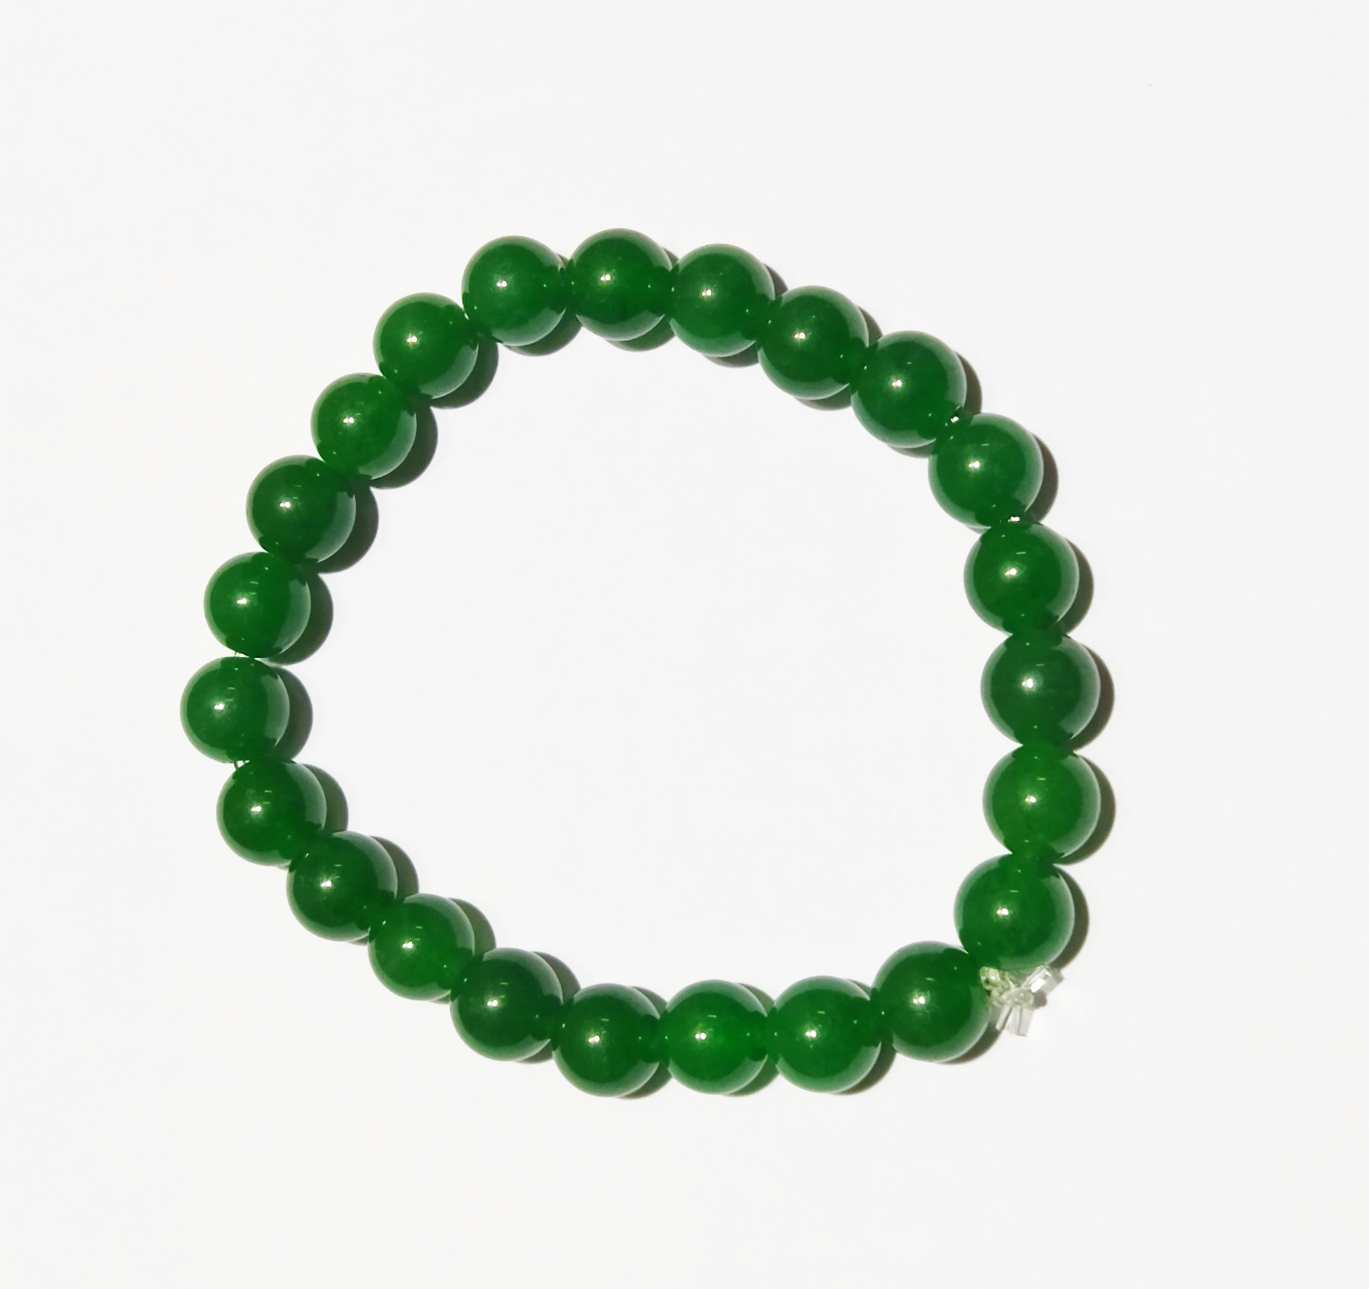 Buy Green Jade Bracelet (Stone of Heaven) Online in India - Mypoojabox.in